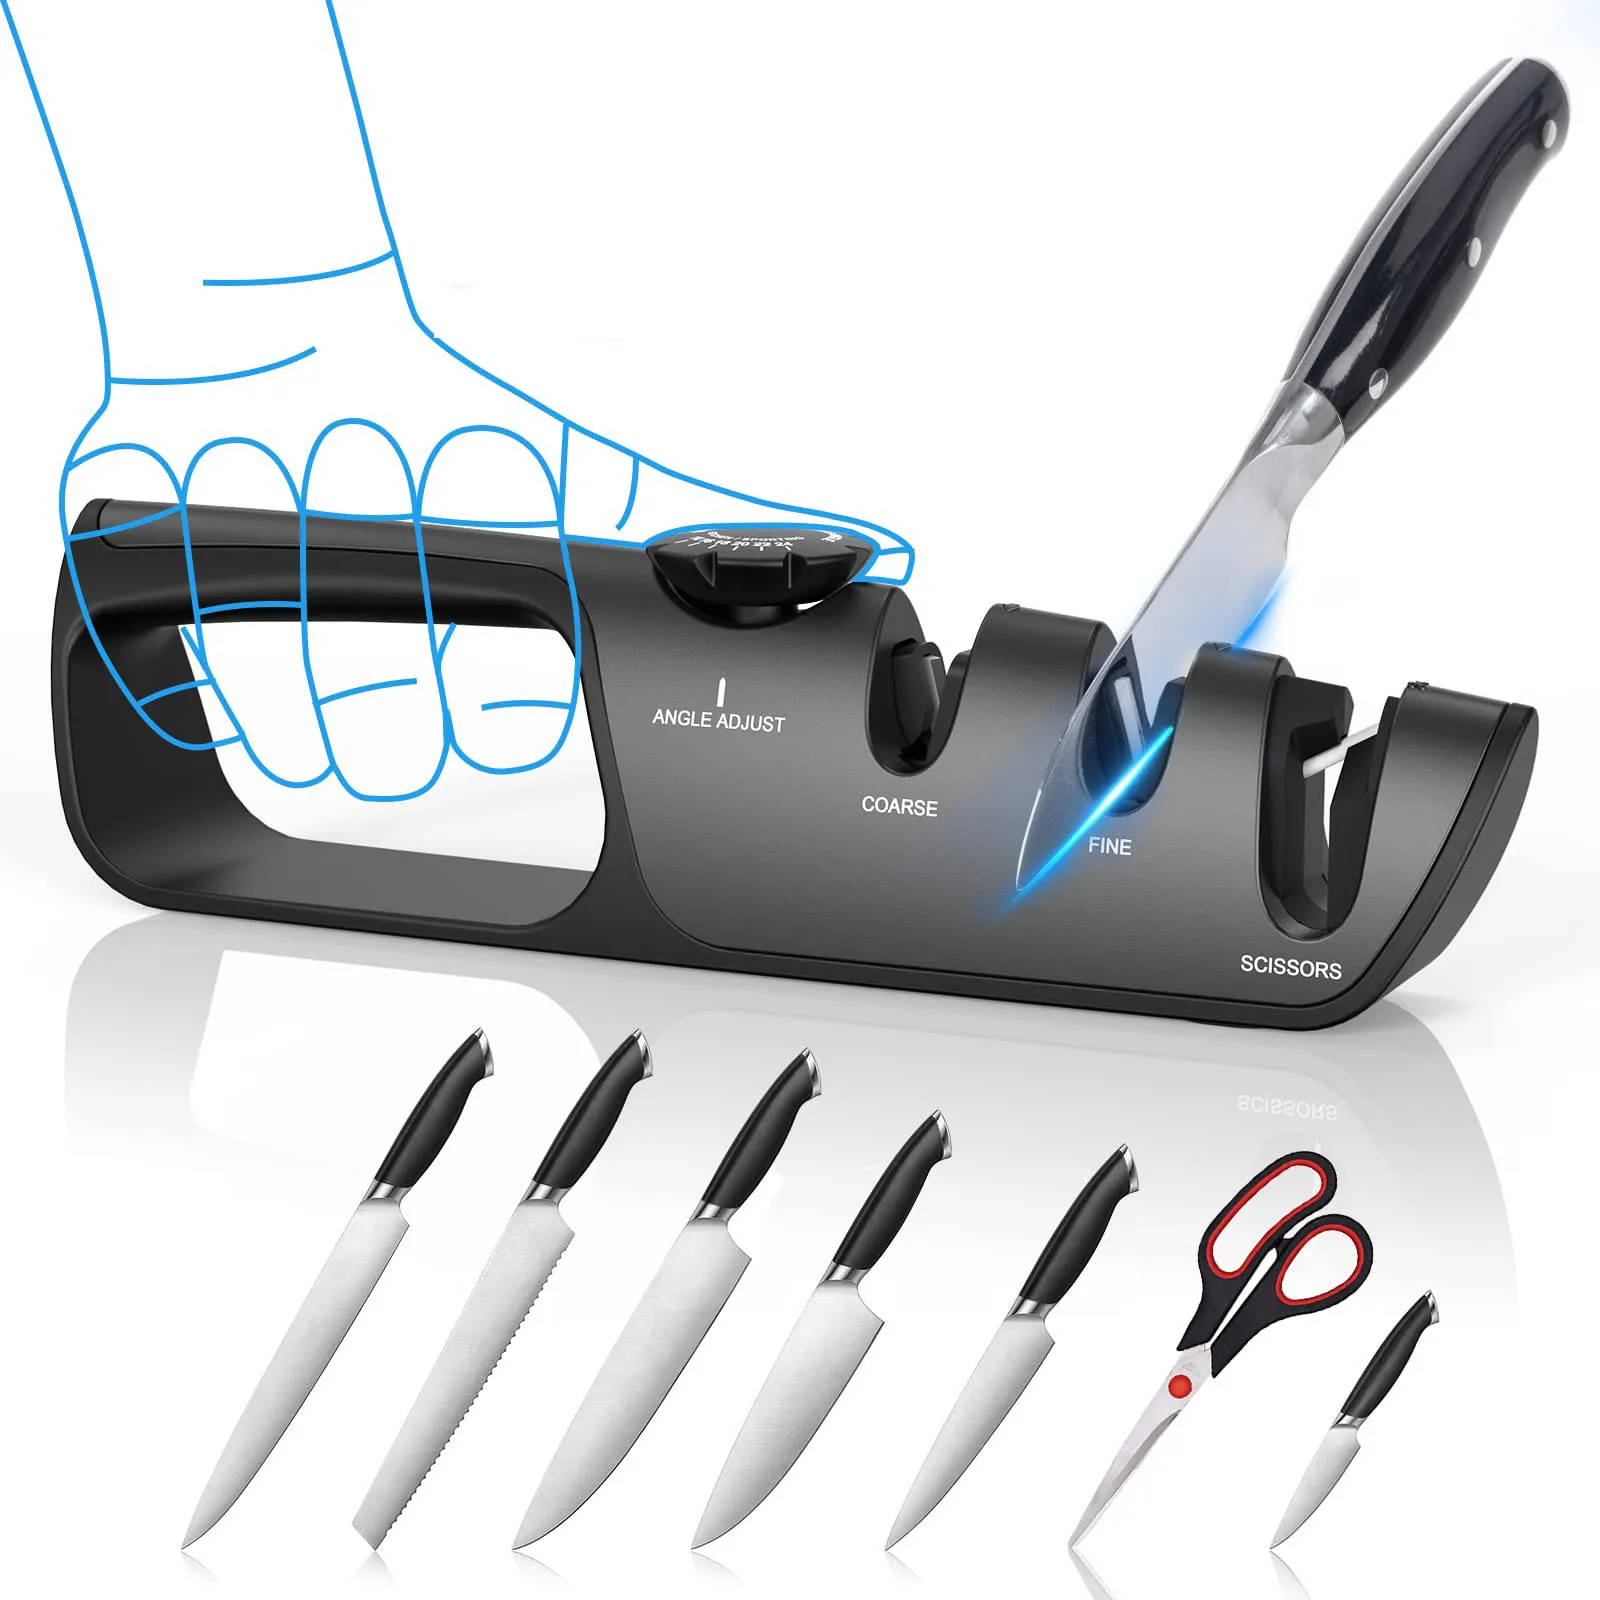 https://ae01.alicdn.com/kf/Sd2bbc4e8b18547548e3125e10c948e620/Knife-Sharpener-5-in-1-Adjustable-Angle-Kitchen-Grinding-Machine-Professional-Knife-Scissors-Sharpening-Tools-Home.jpg